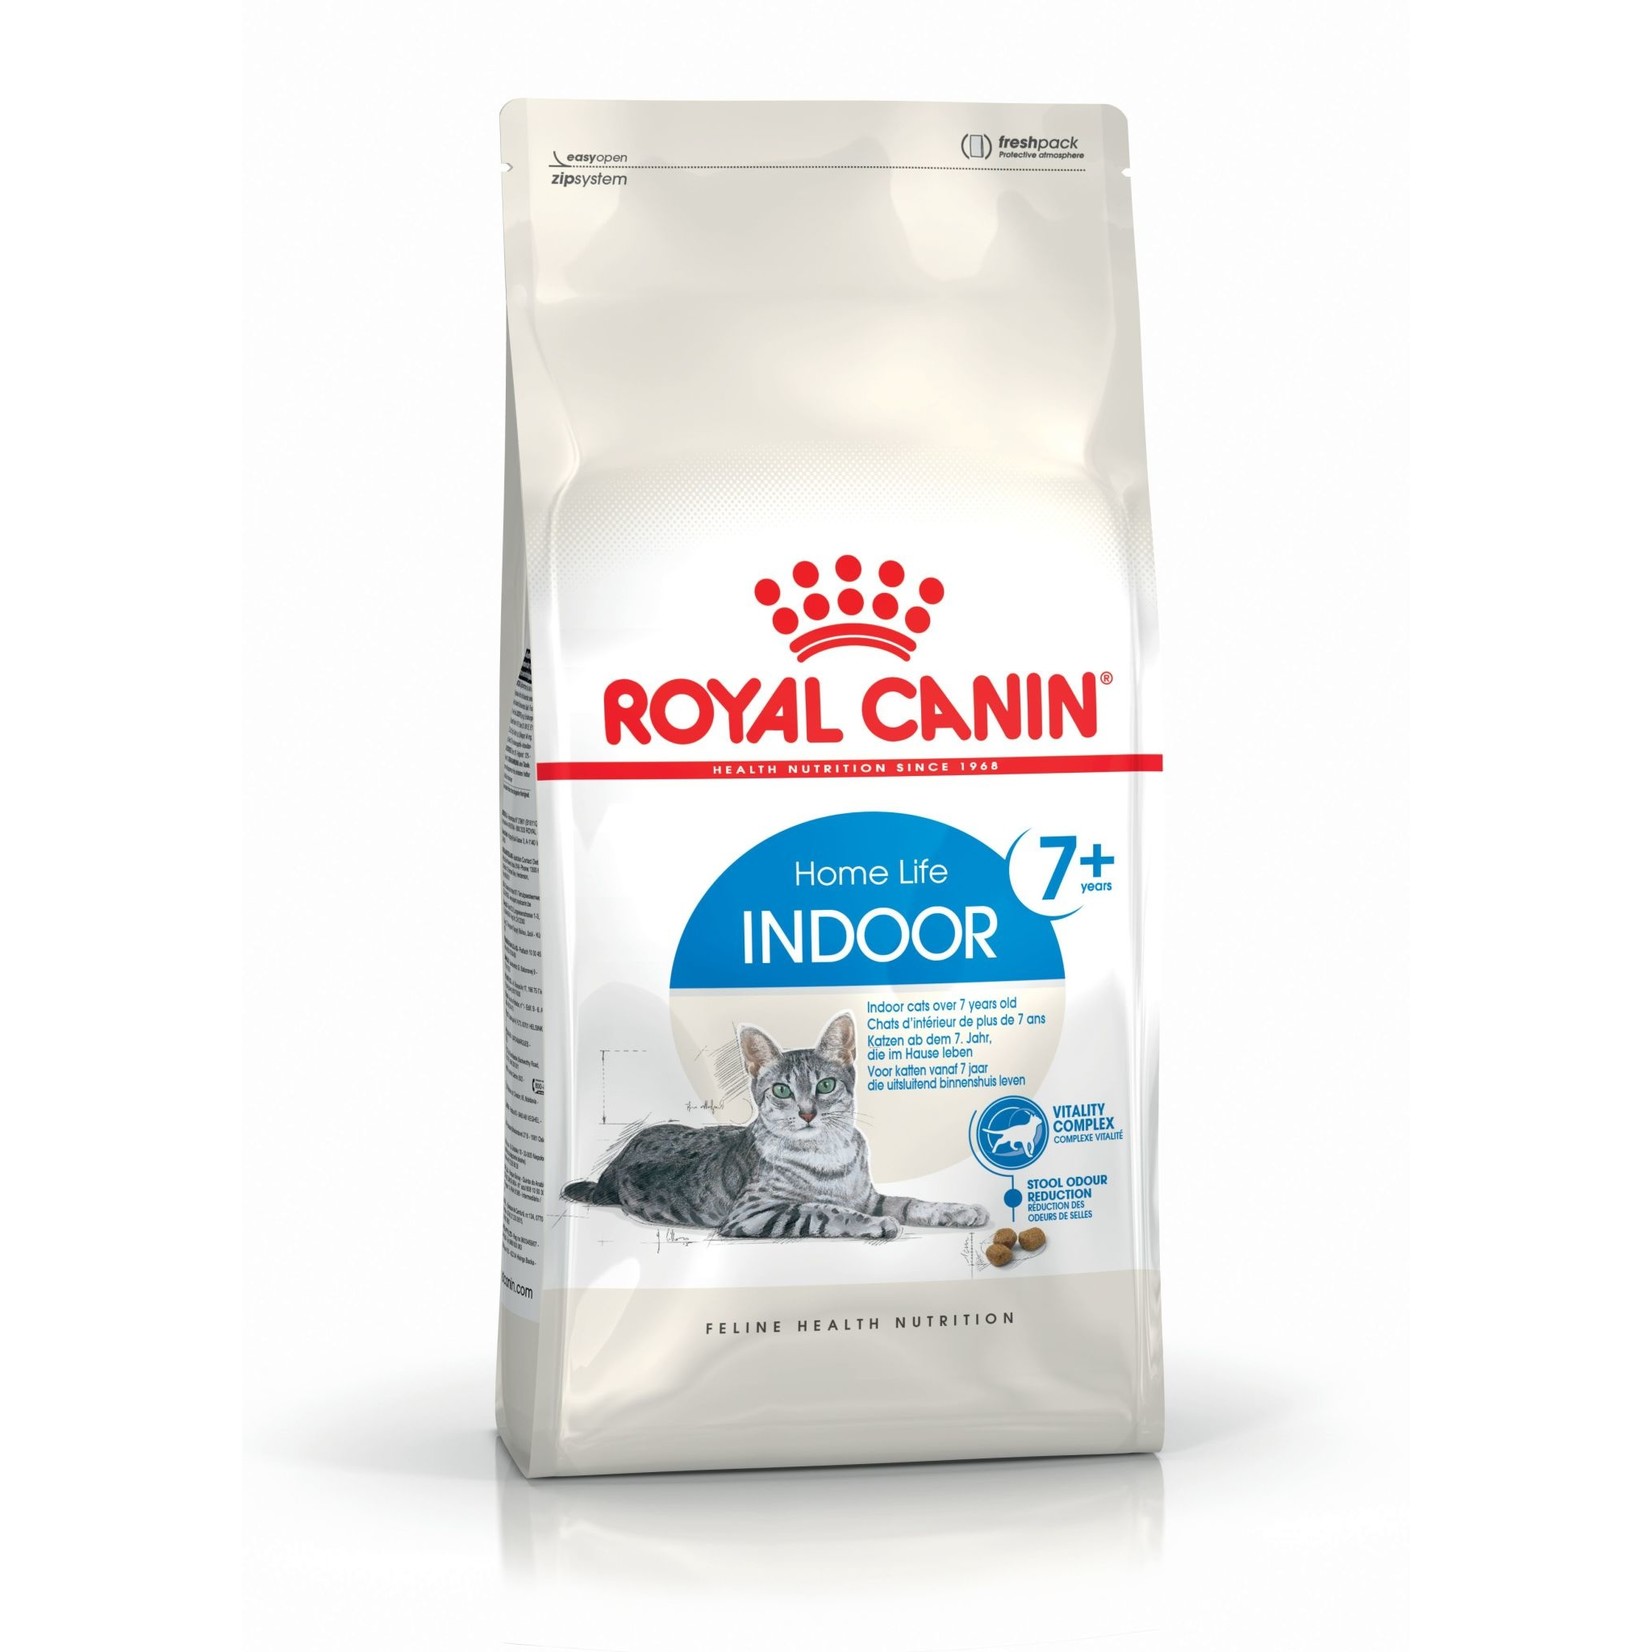 Royal Canin Indoor 7+ Senior Cat Dry Food